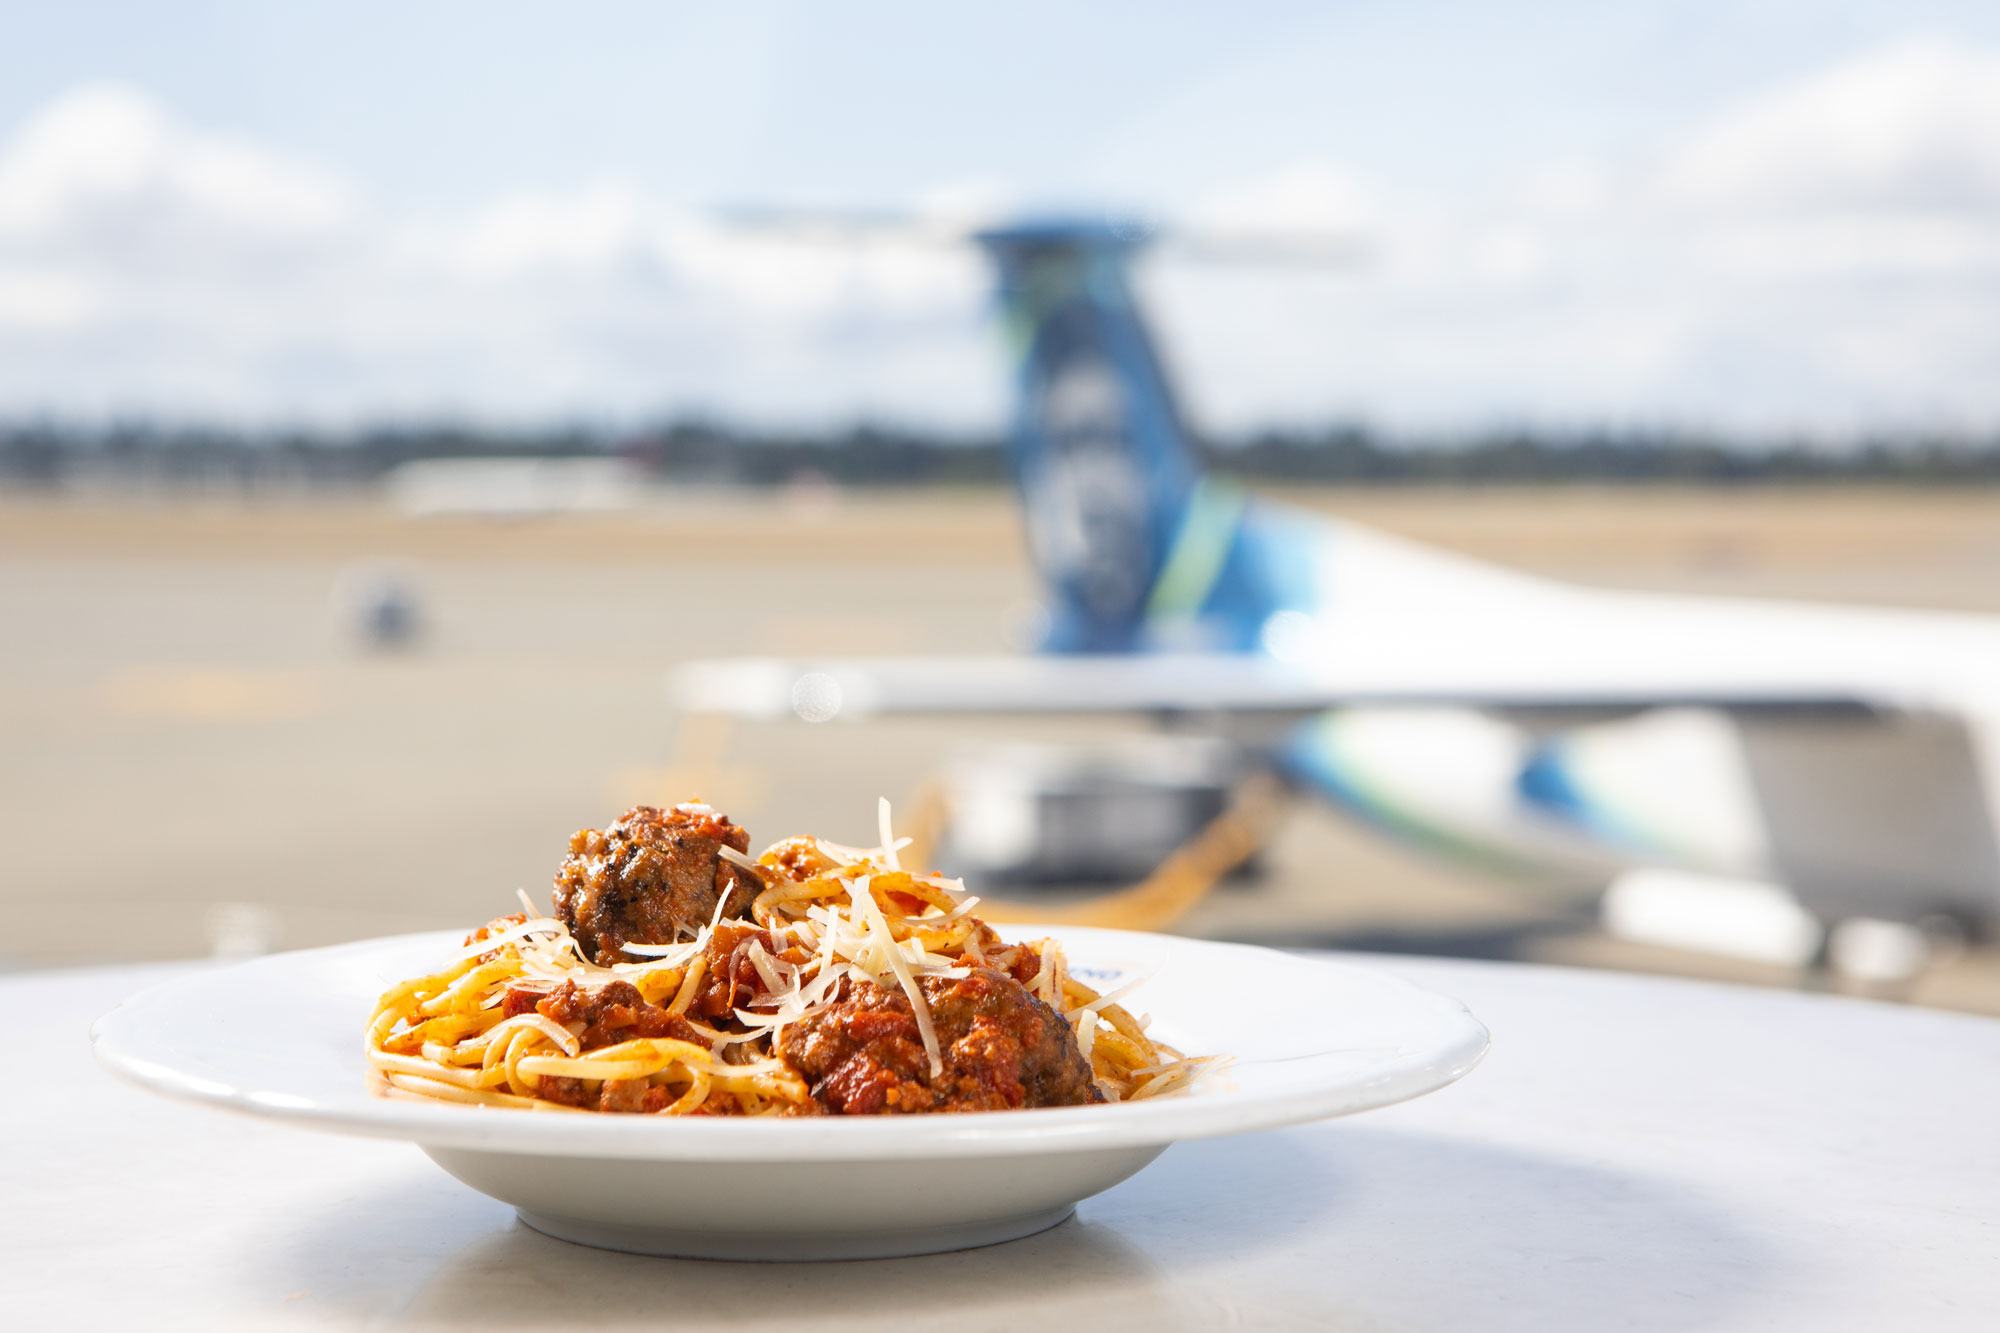 SEA Pallino Spaghetti and Meatballs with Plane in the Background